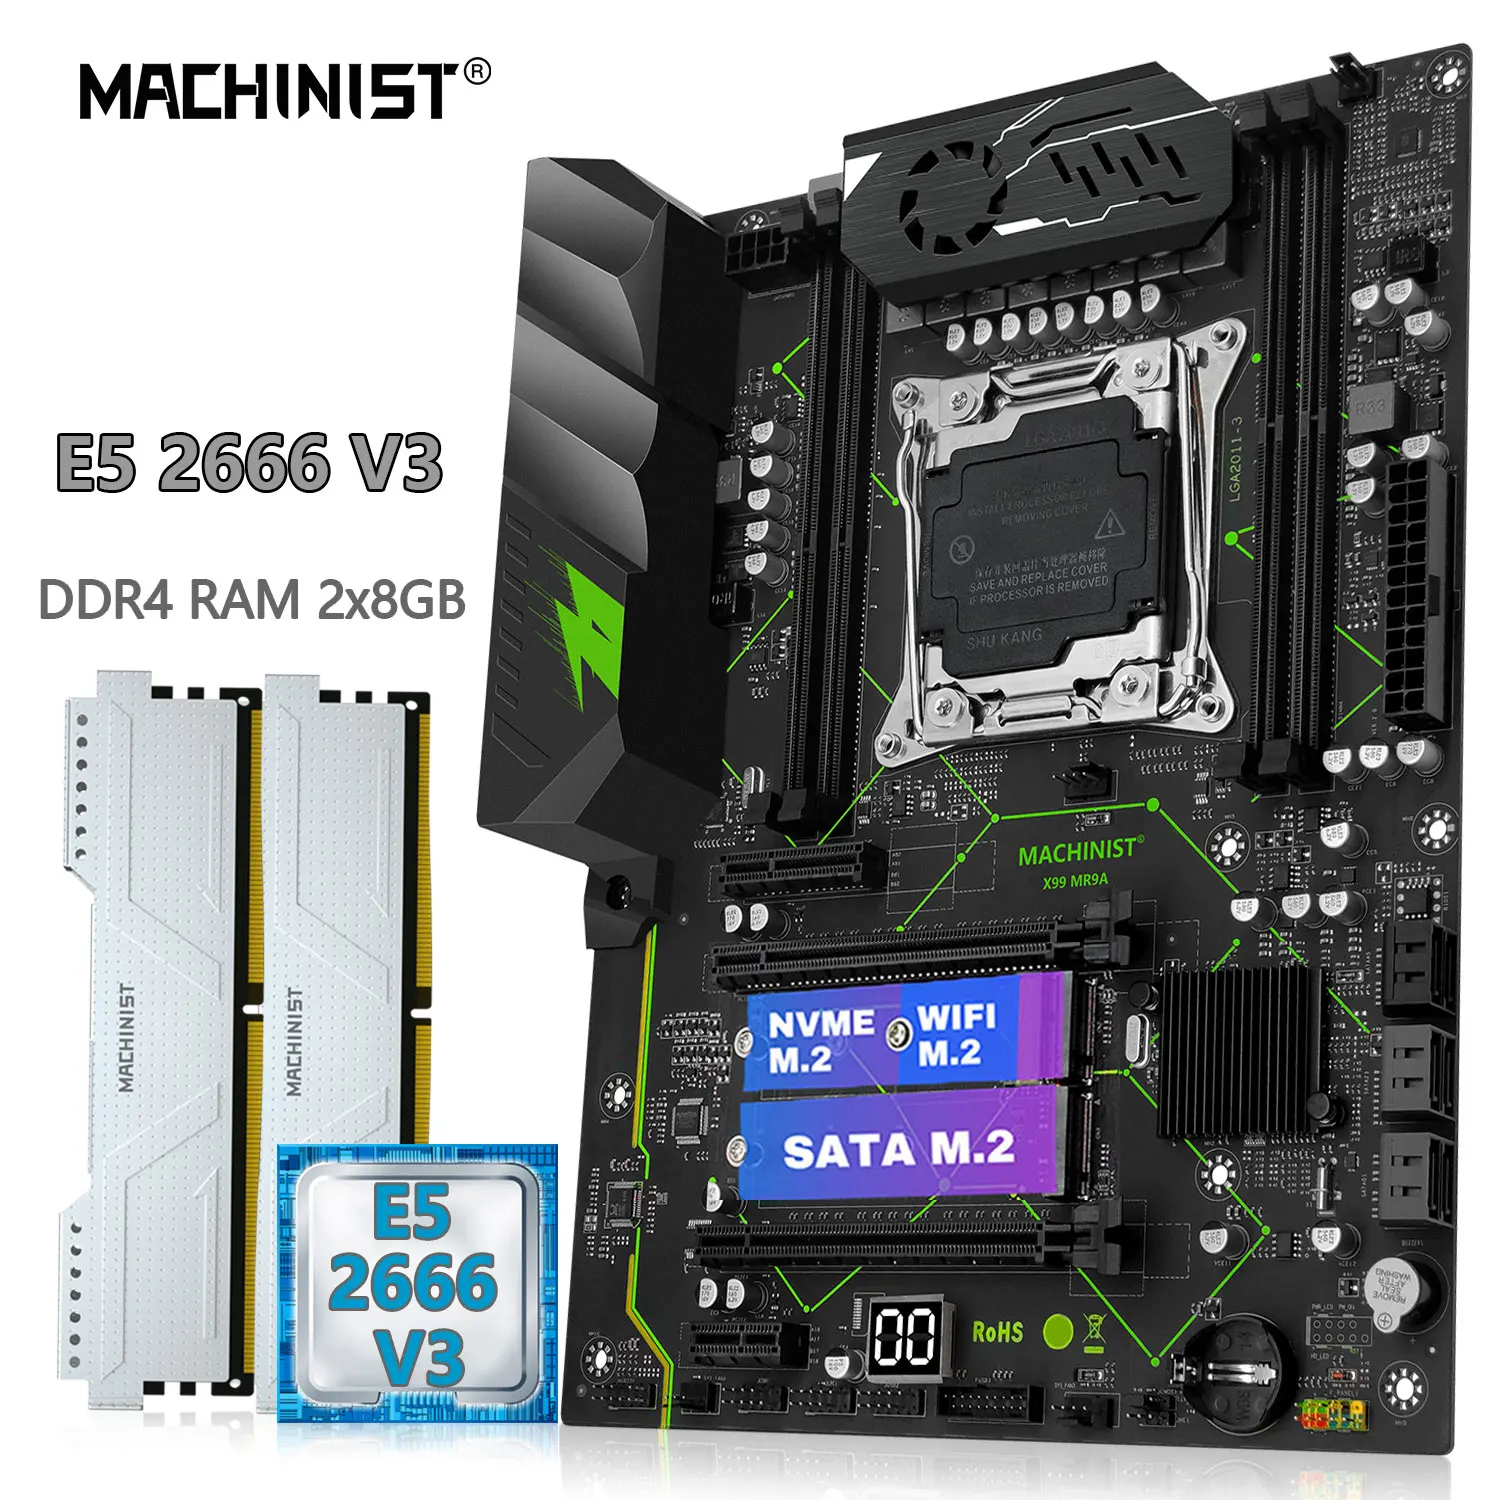 MACHINIST X99 Motherboard Combo kit Whit Xeon E5 2666 V3 CPU LGA 2011-3 DDR4 2PCS*8GB 2666MHz RAM USB3.0 NVME SATA M.2 X99 MR9A